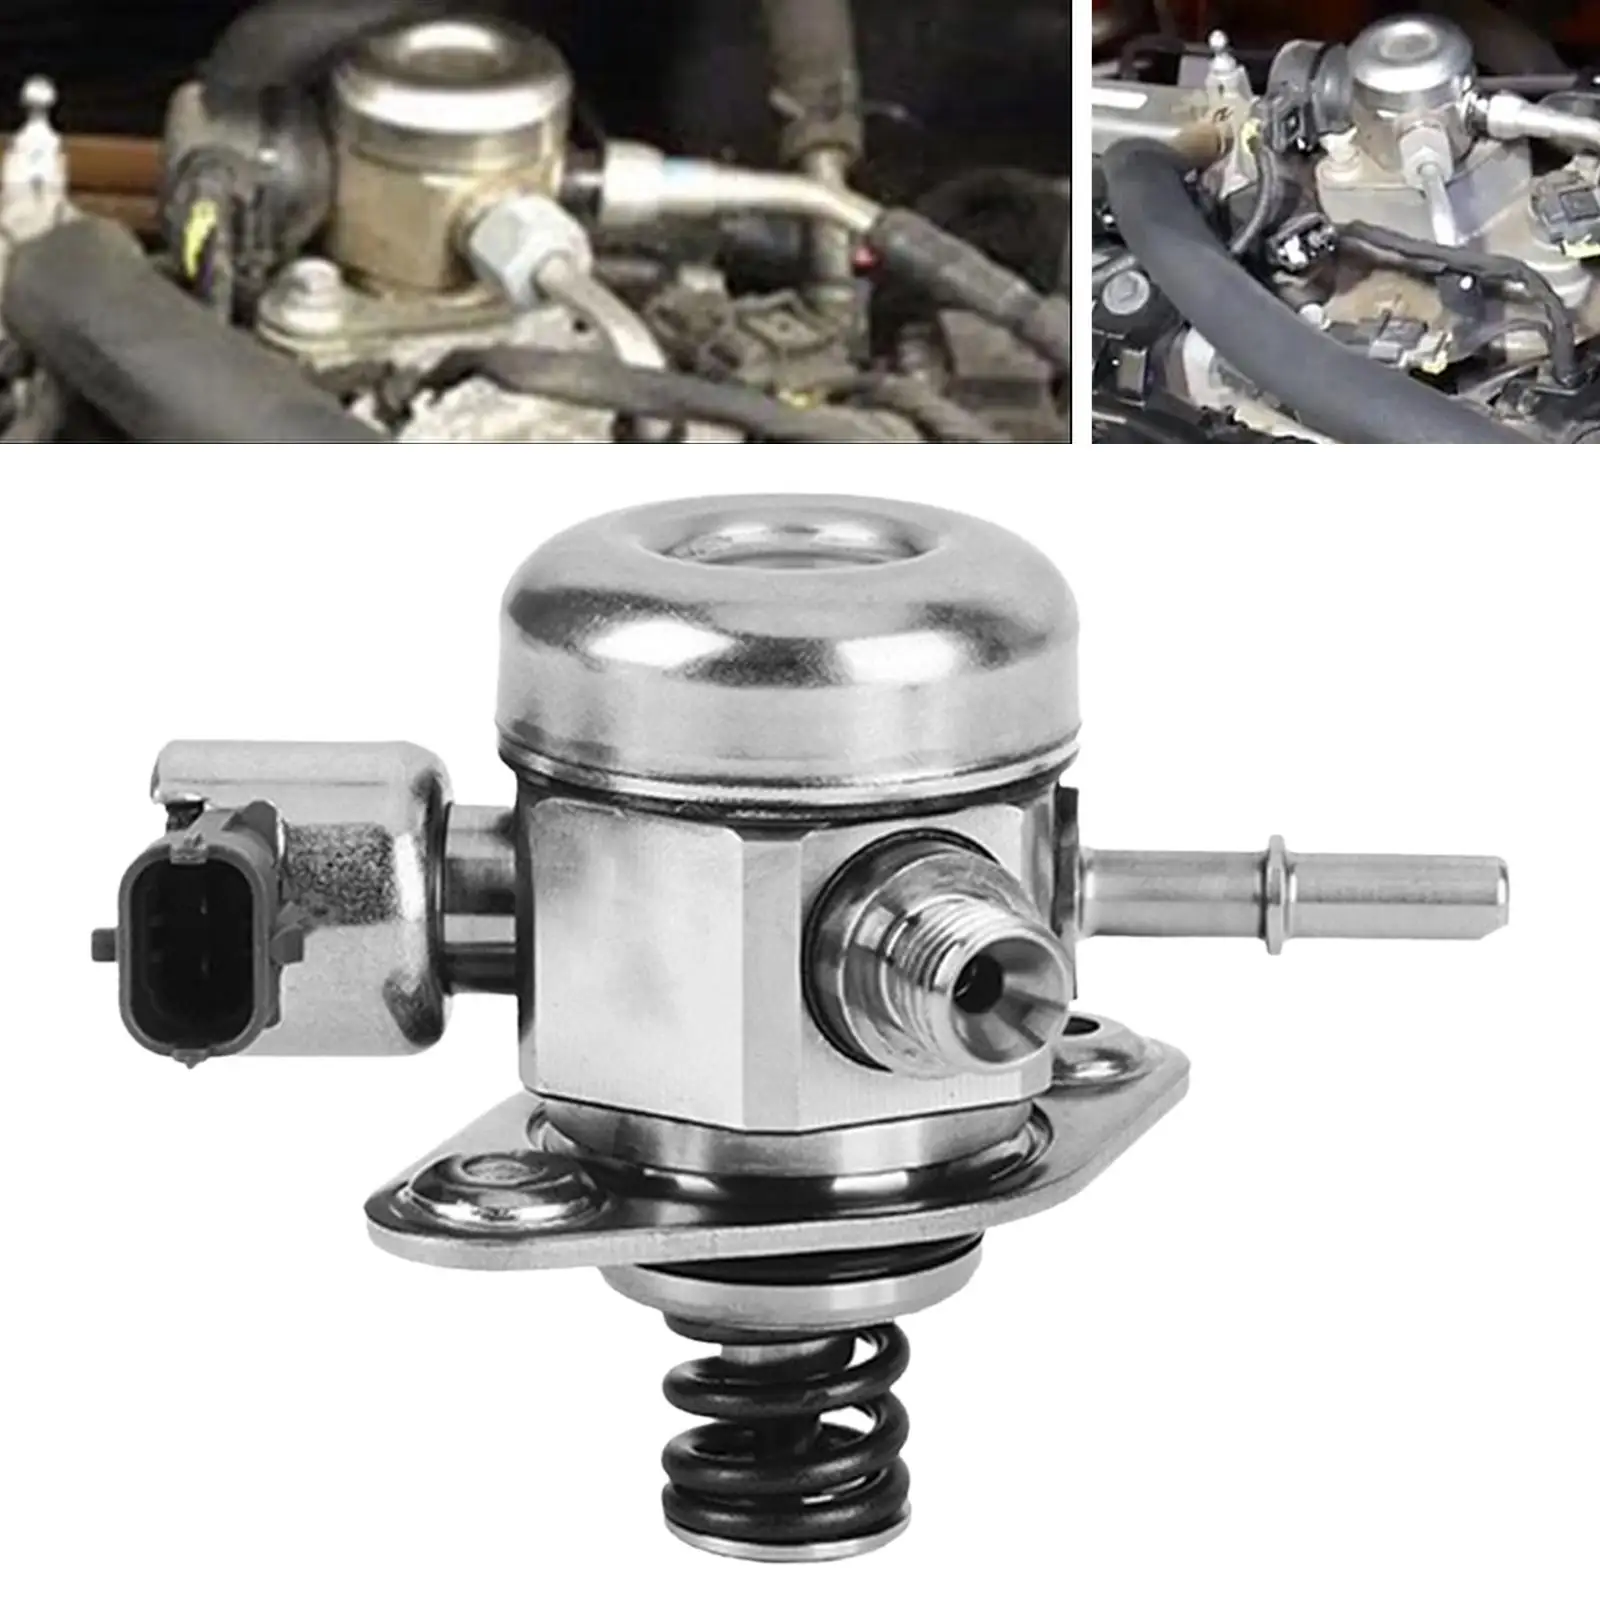 35320-2B220 Fuel Pump Spare Parts Replaces Parts 35320-2B140 for Accent